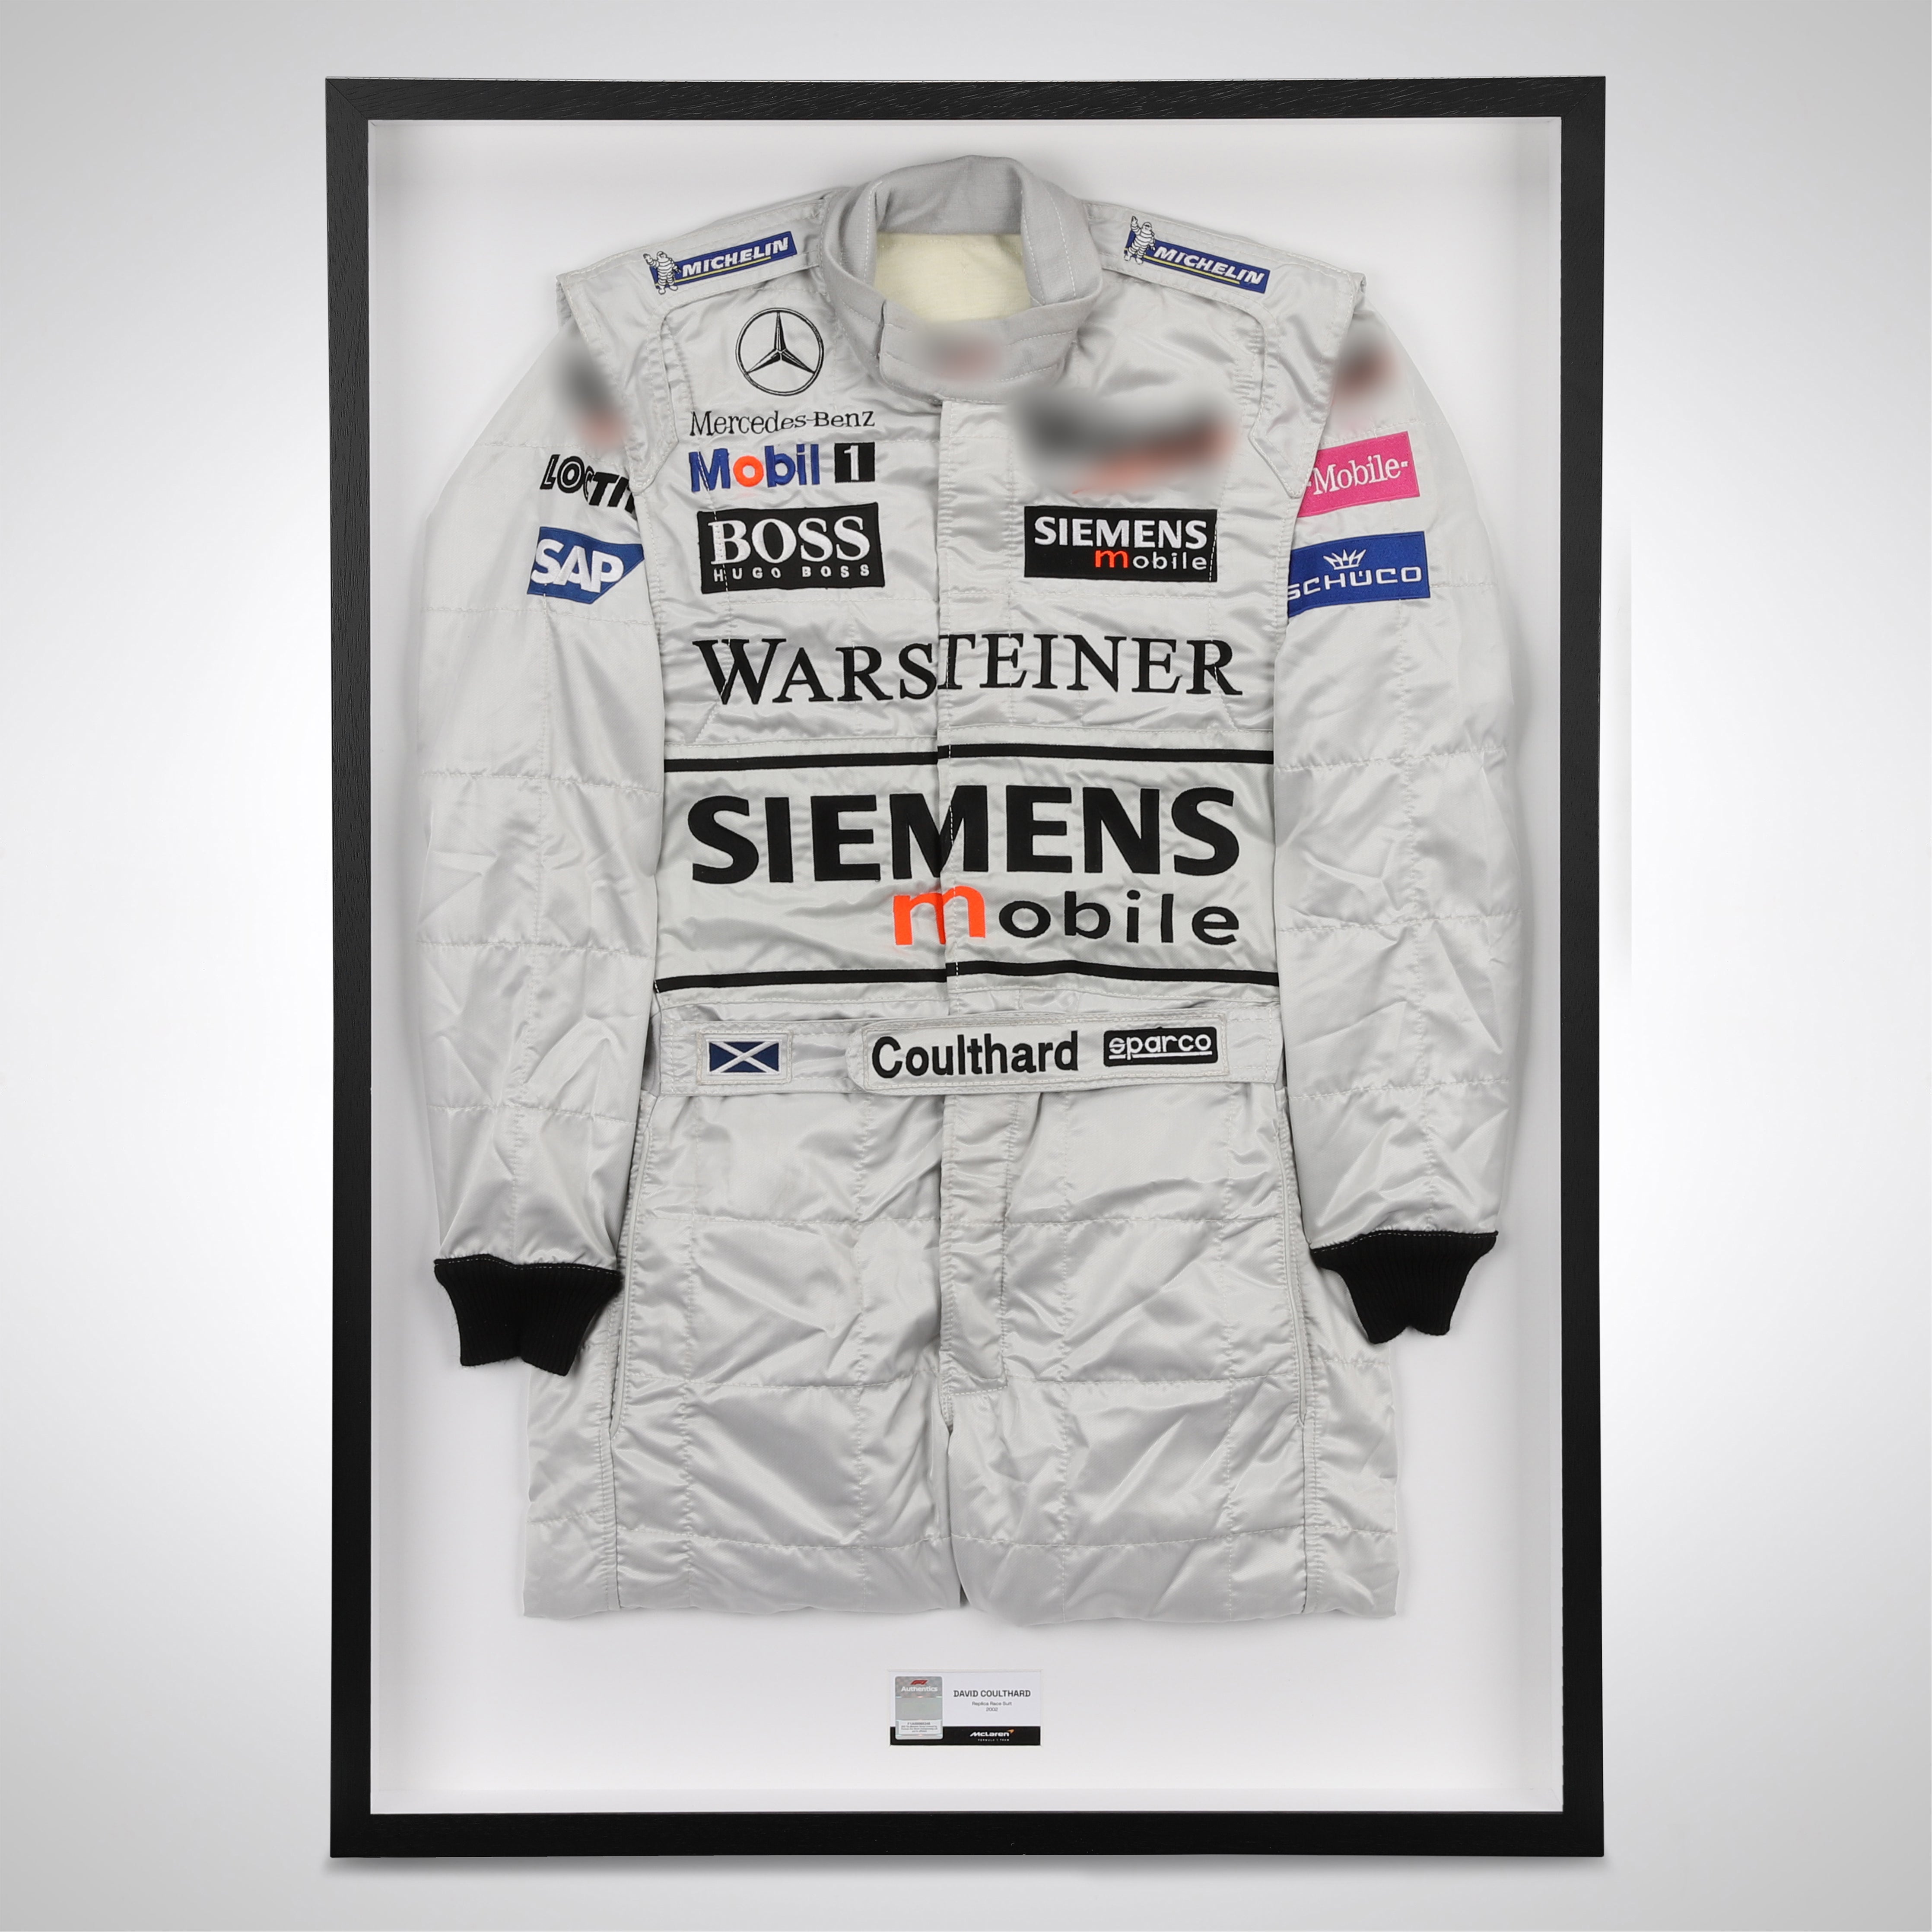 David Coulthard 2002 Replica McLaren F1 Team Race Suit with Warsteiner and Siemens Branding